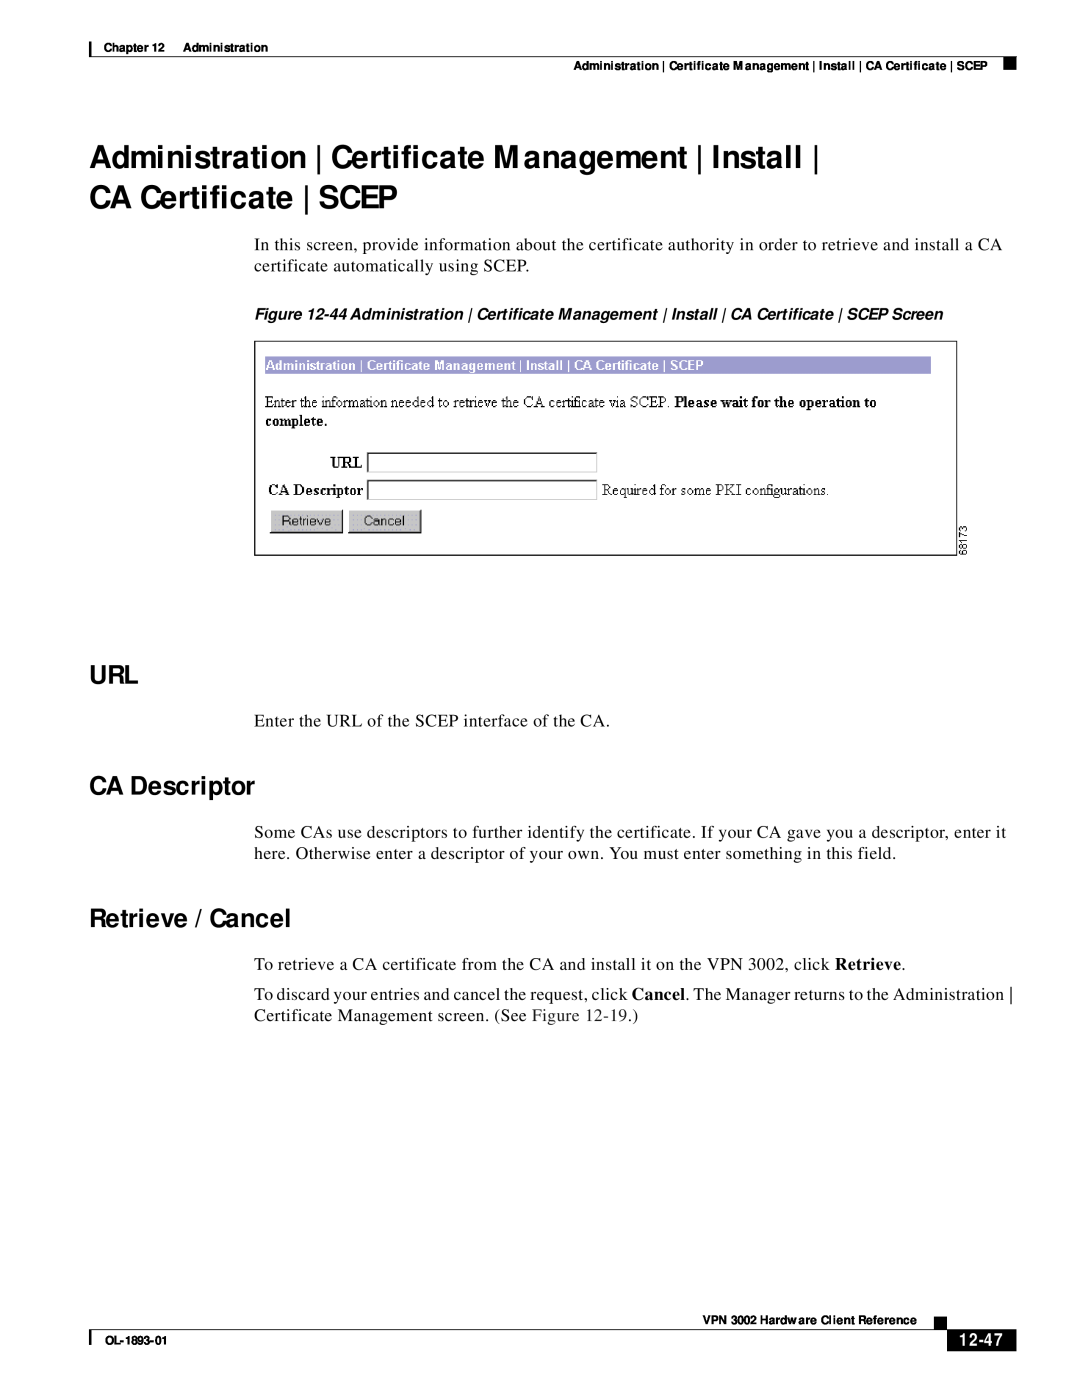 Cisco Systems VPN 3002 manual CA Descriptor, Retrieve / Cancel, 12-47 